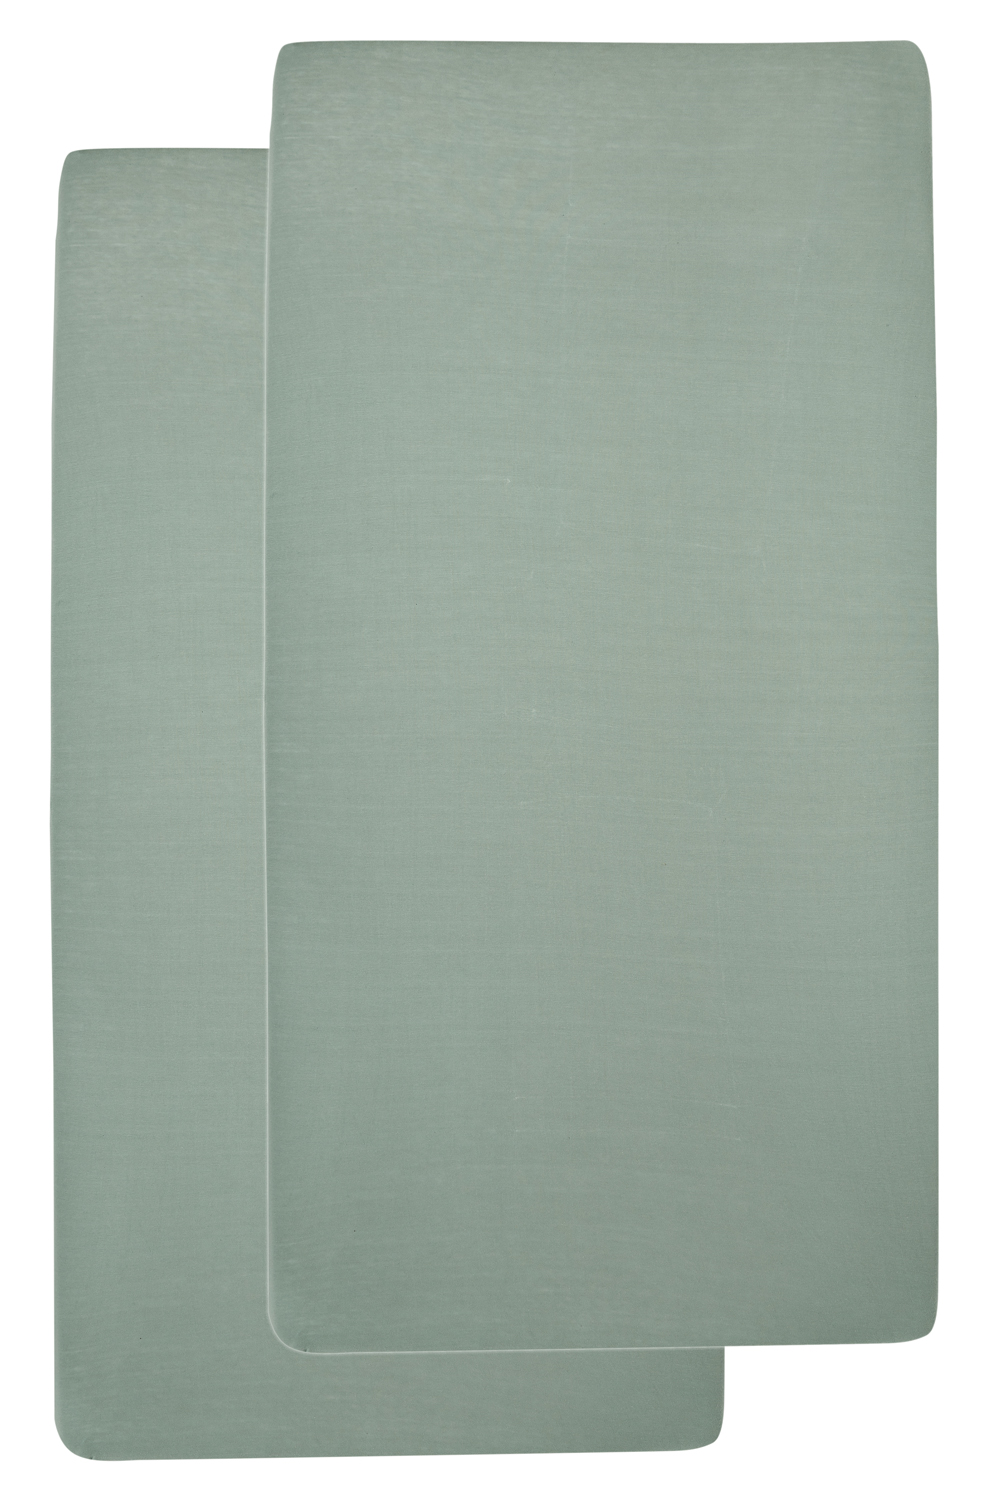 Jersey Hoeslaken 2-Pack - Stone Green - 60x120cm